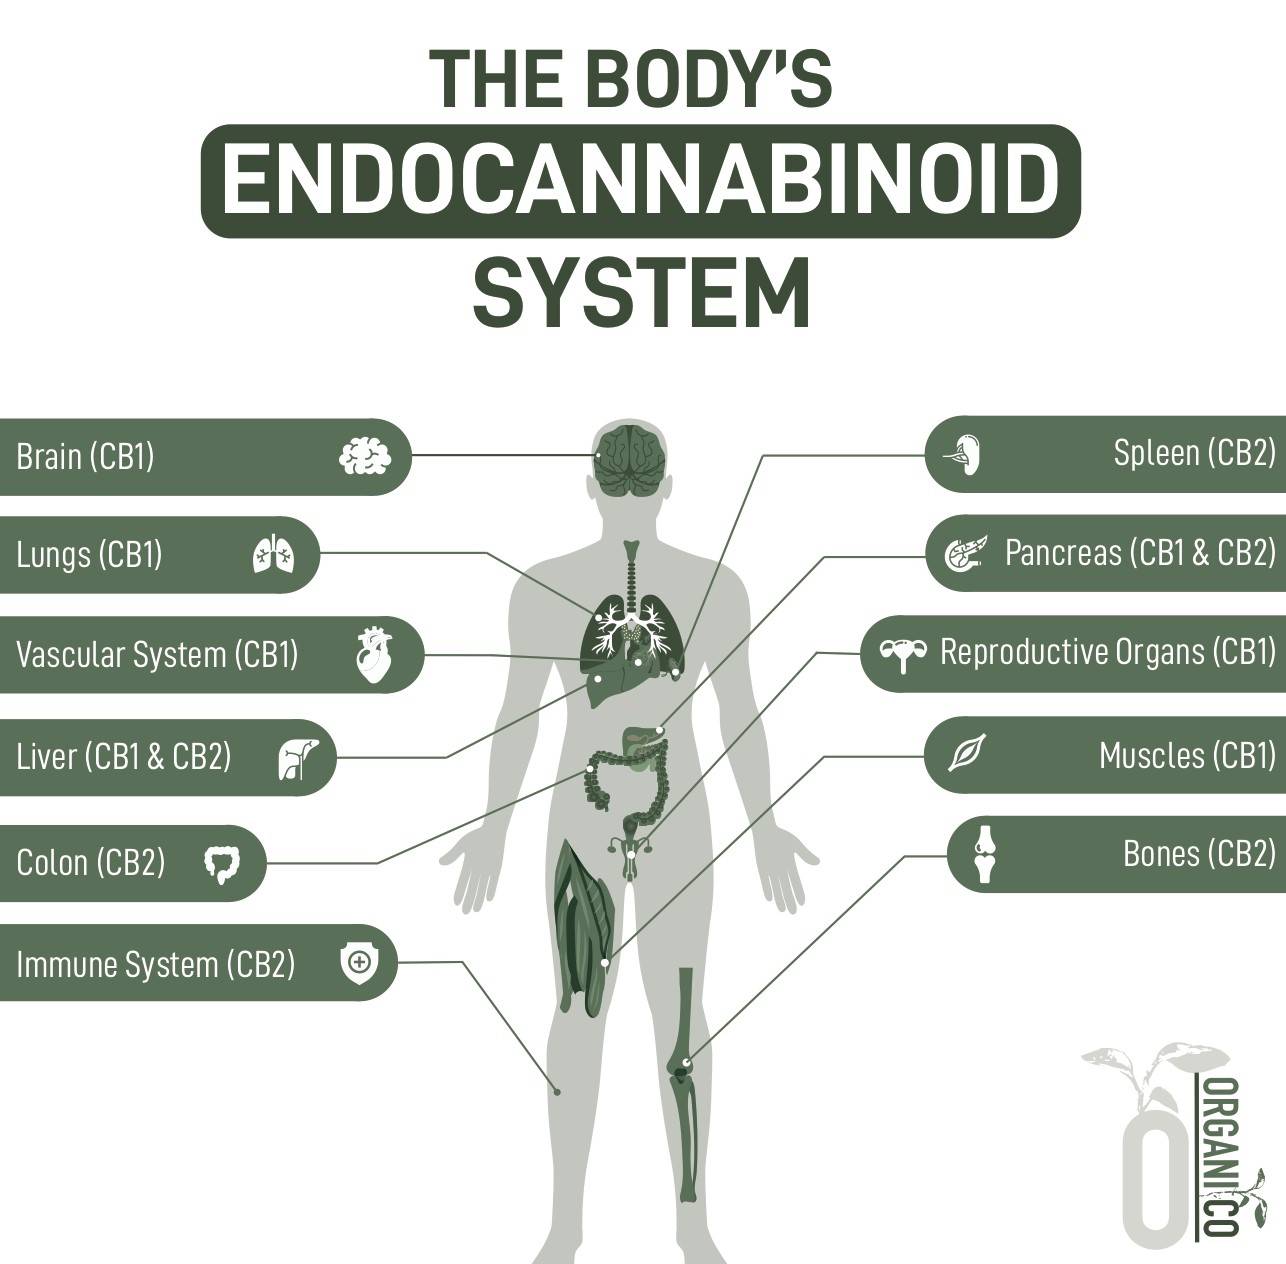 ENDOCANNABINOID SYSTEM (ECS system)